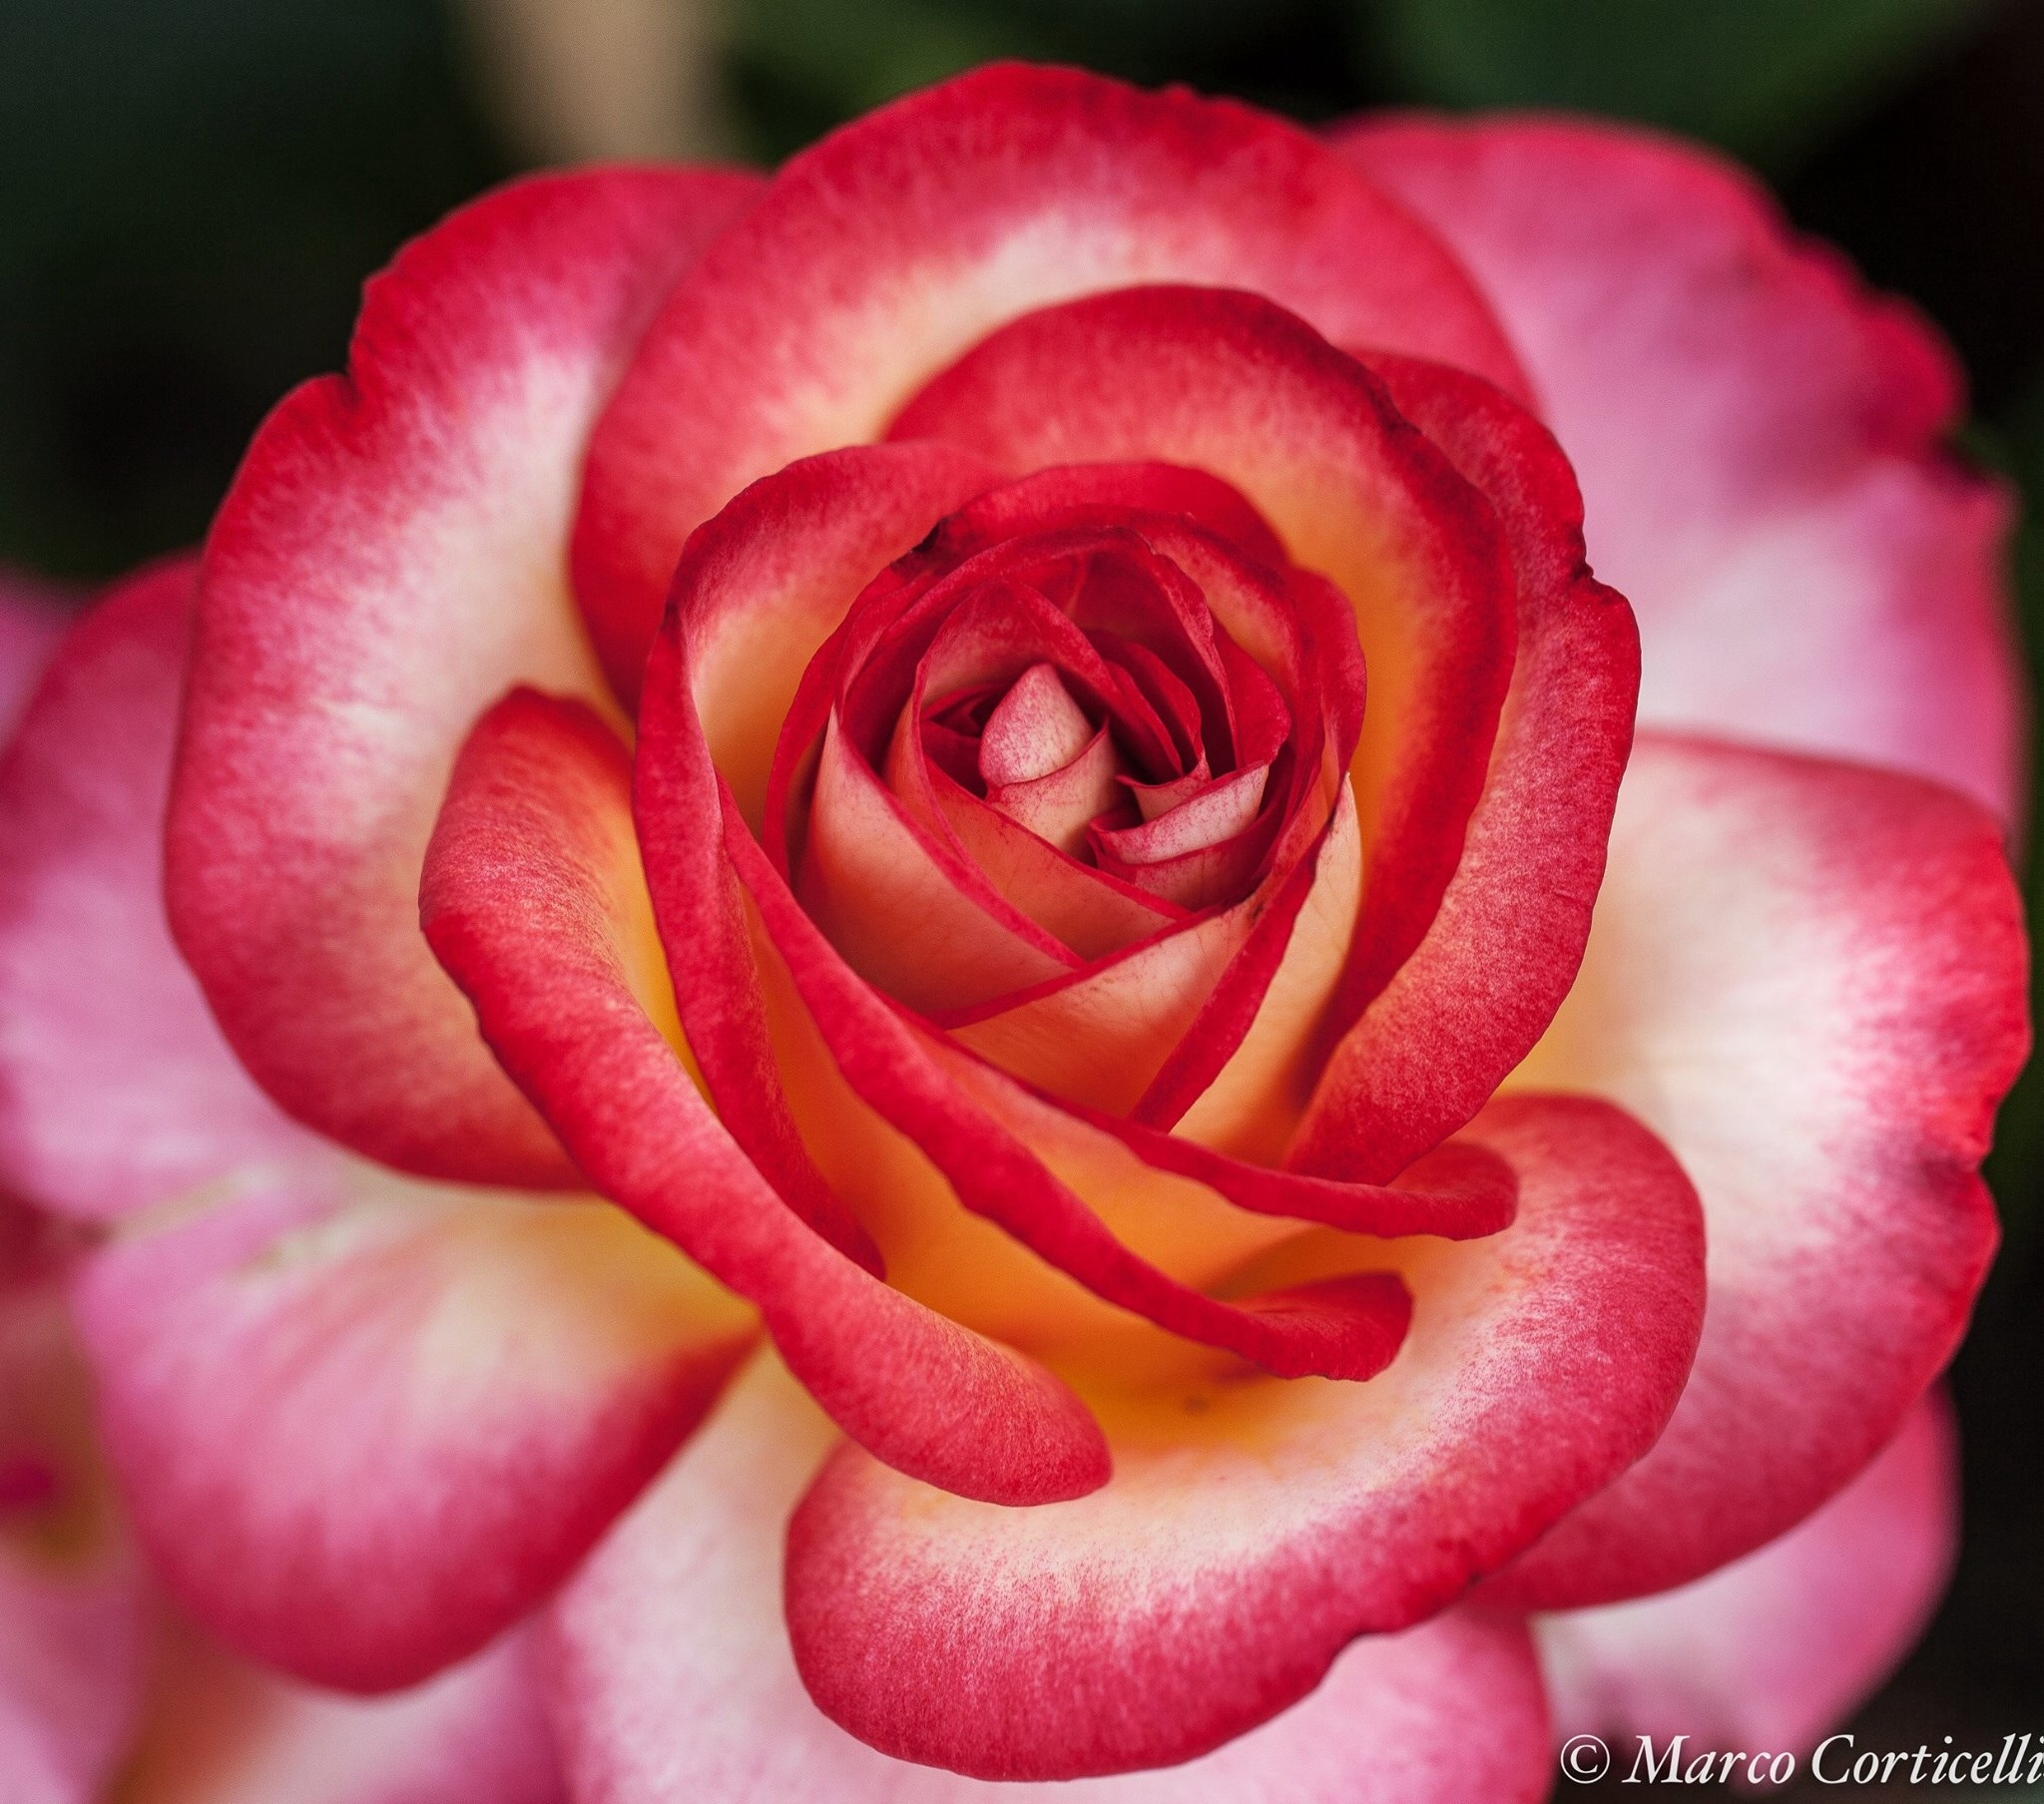 A rose particular...